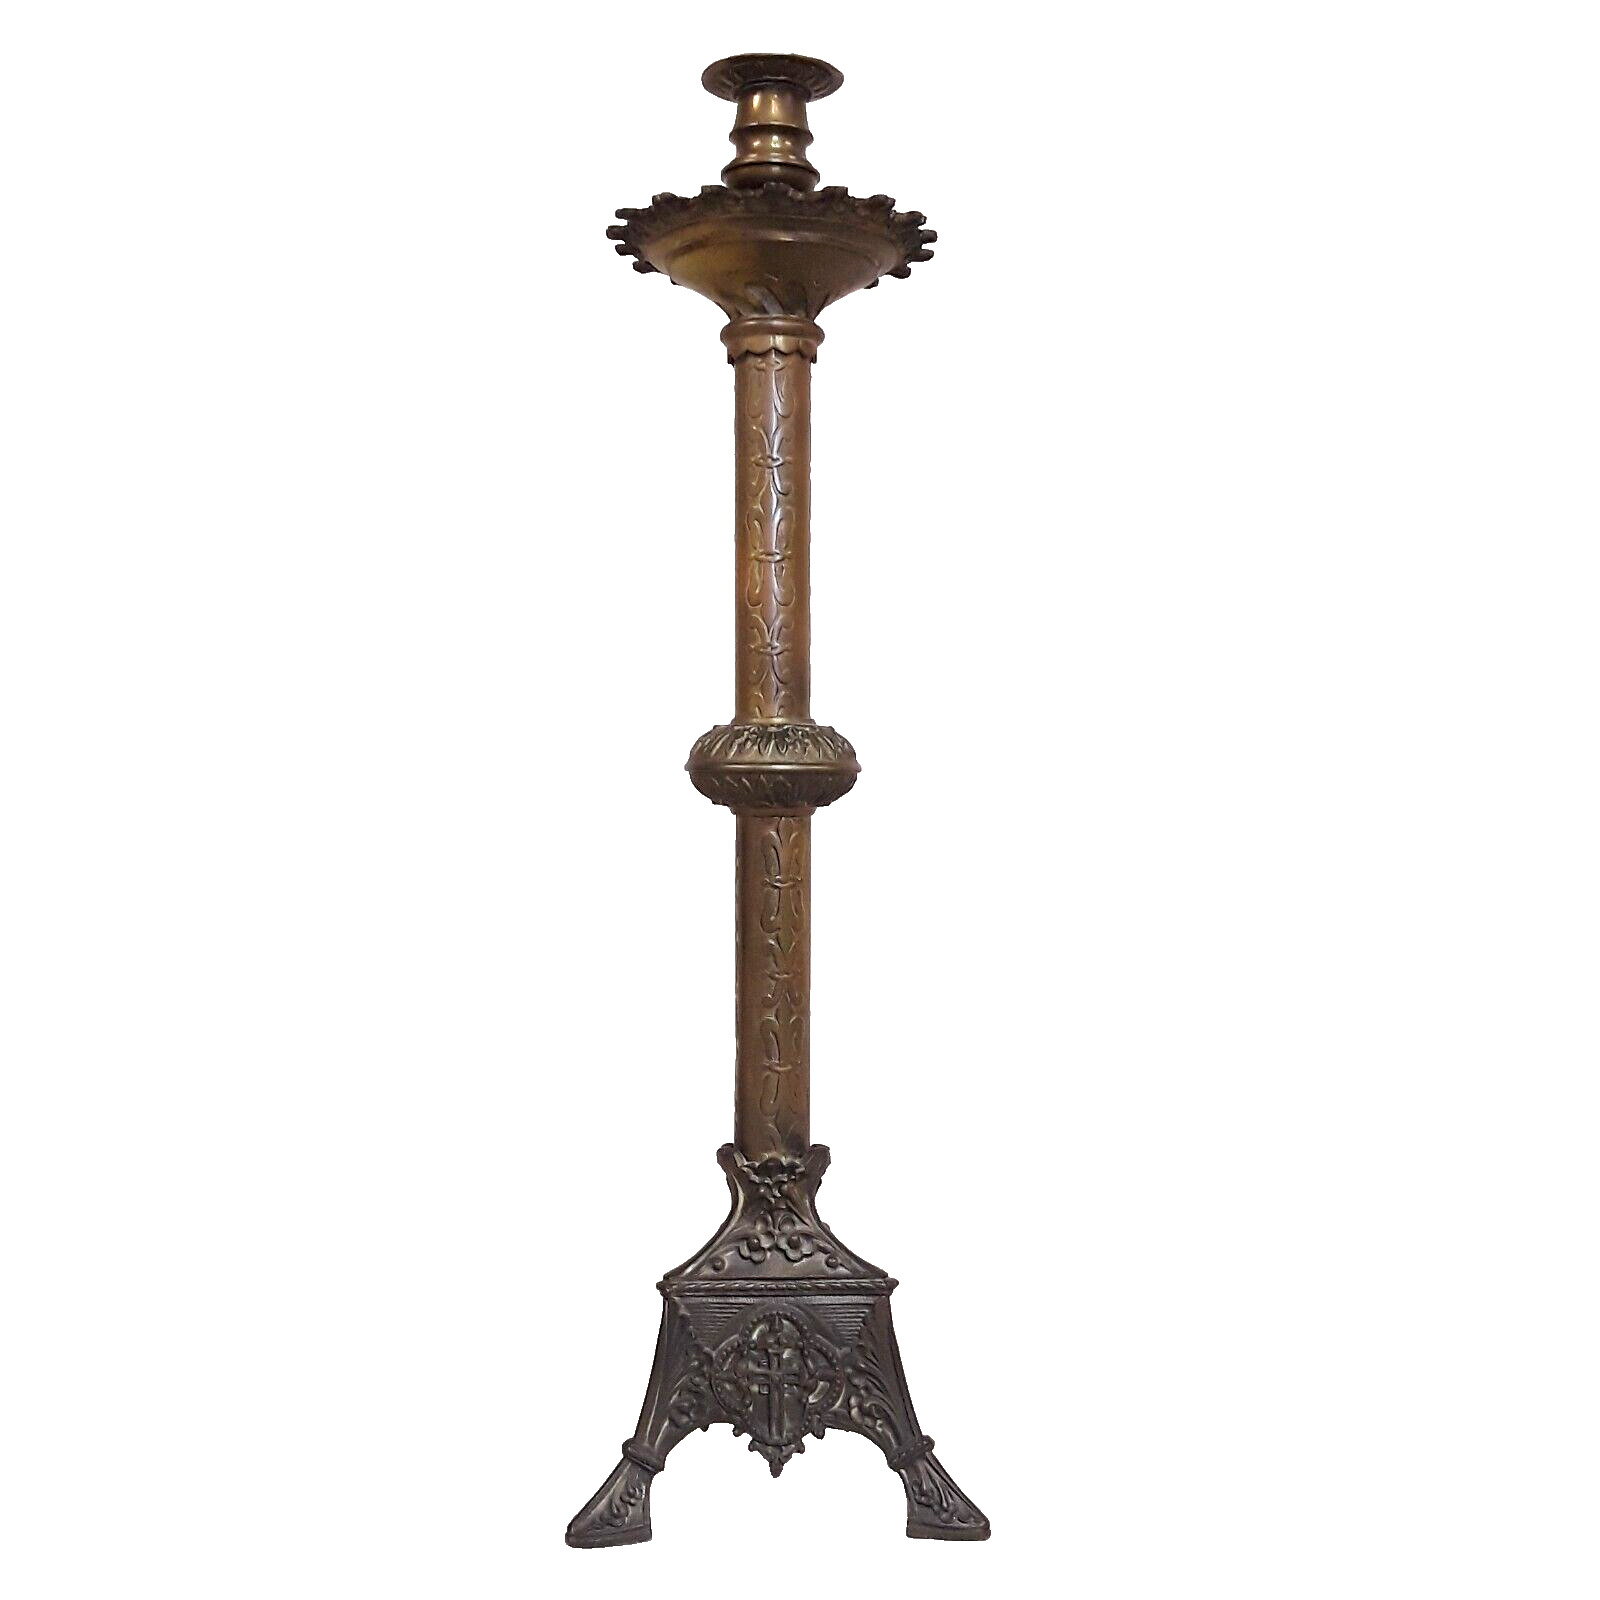 Antique French Christian Brass Candle Holder Church Altar Gothic Fleur de Lis